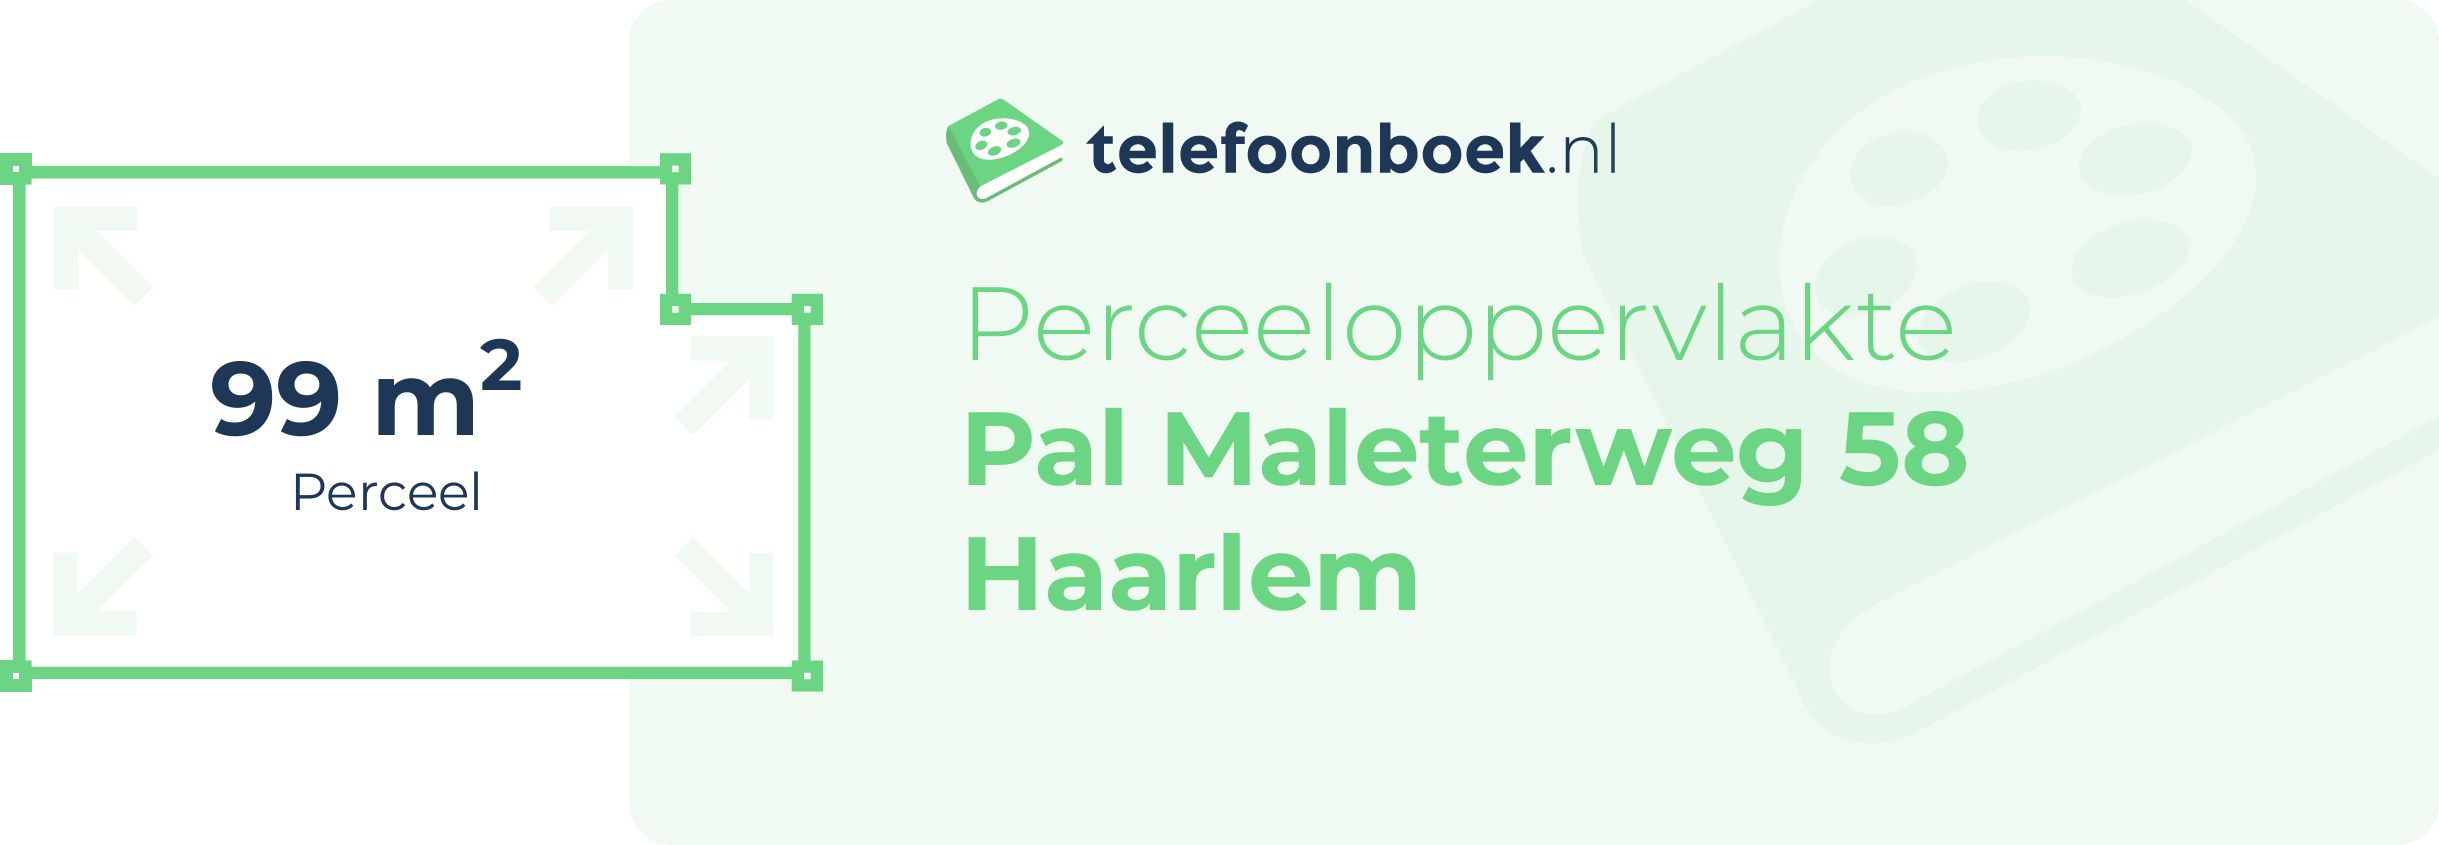 Perceeloppervlakte Pal Maleterweg 58 Haarlem